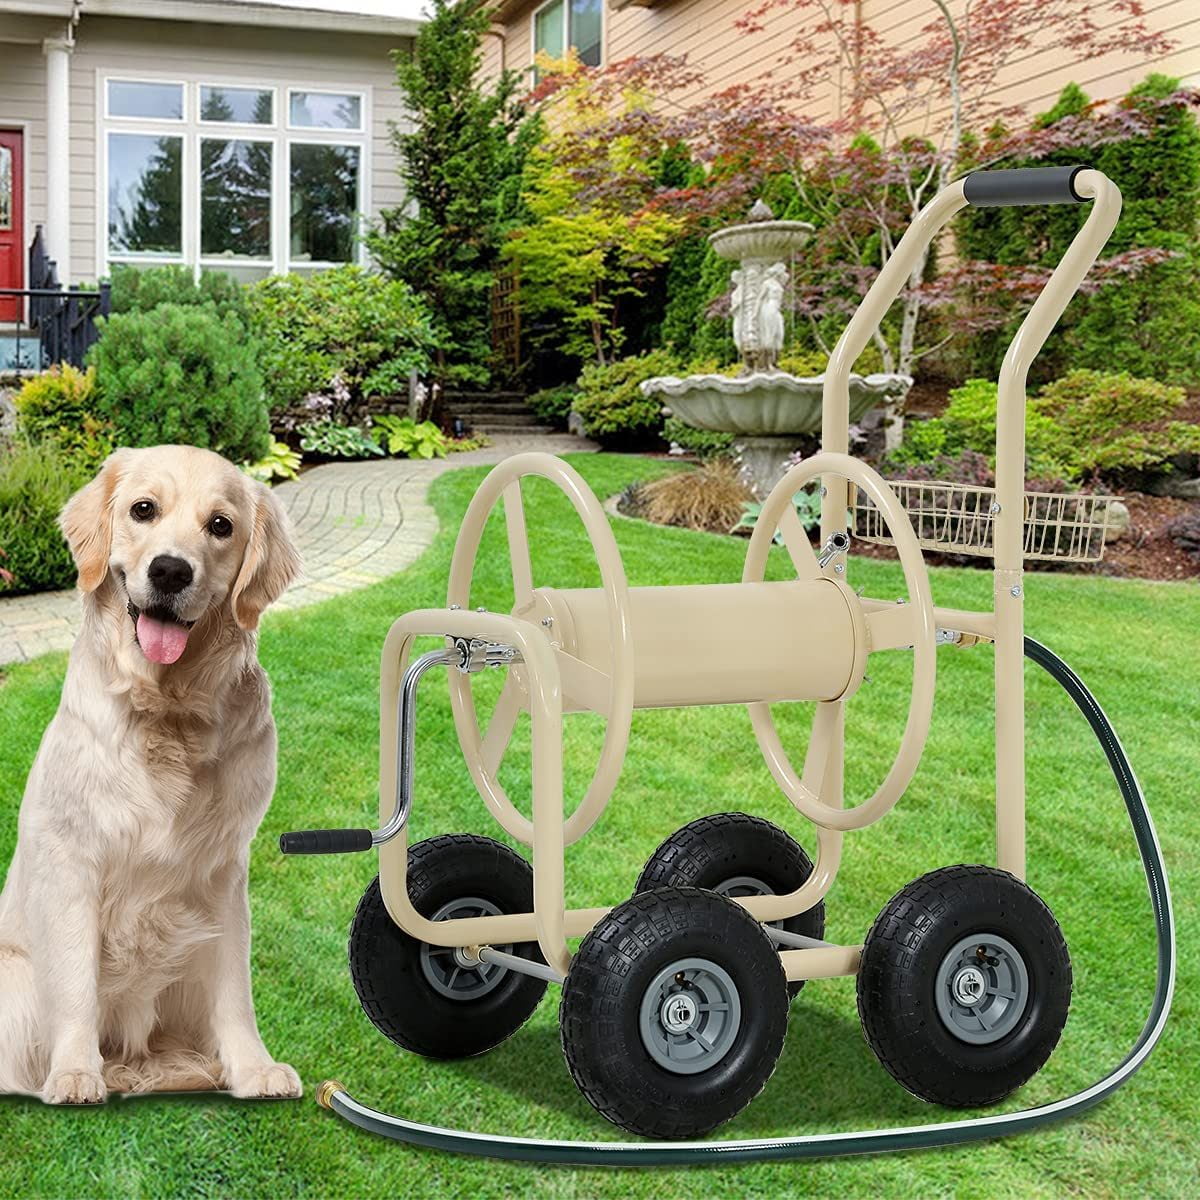 YRLLENSDAN Garden Hose Reel Cart with Wheels, Holds 300